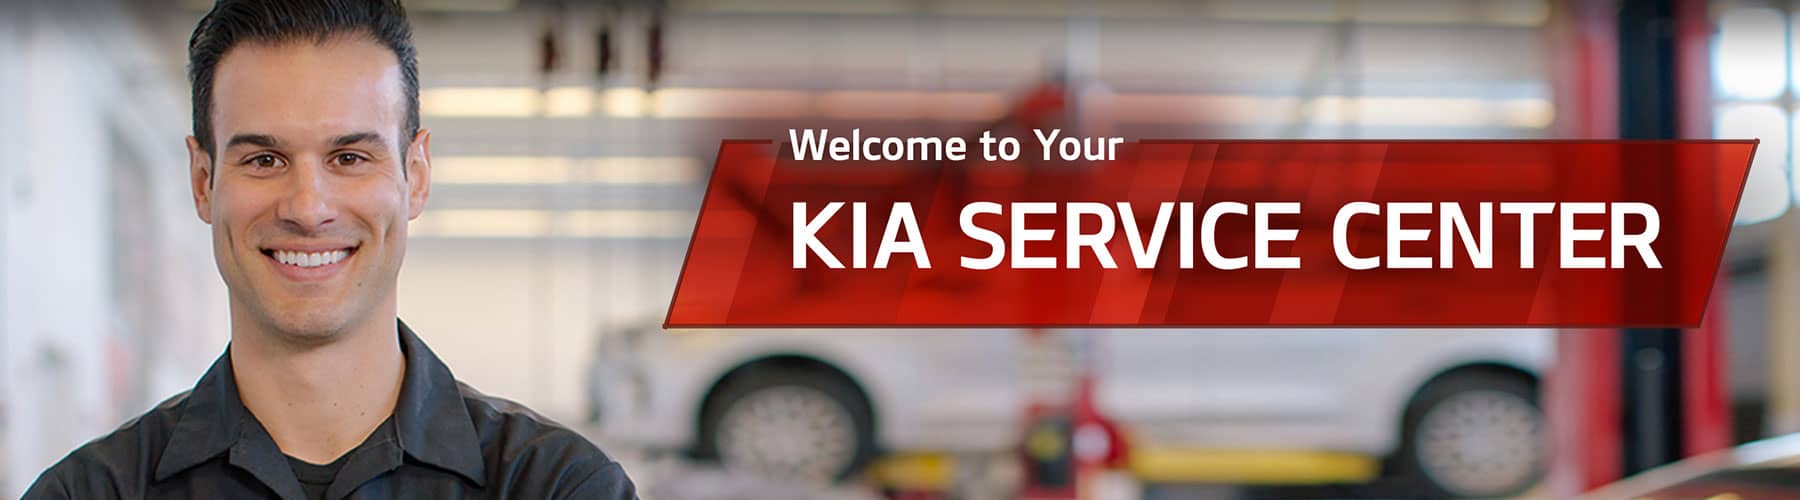 Kia Service Center